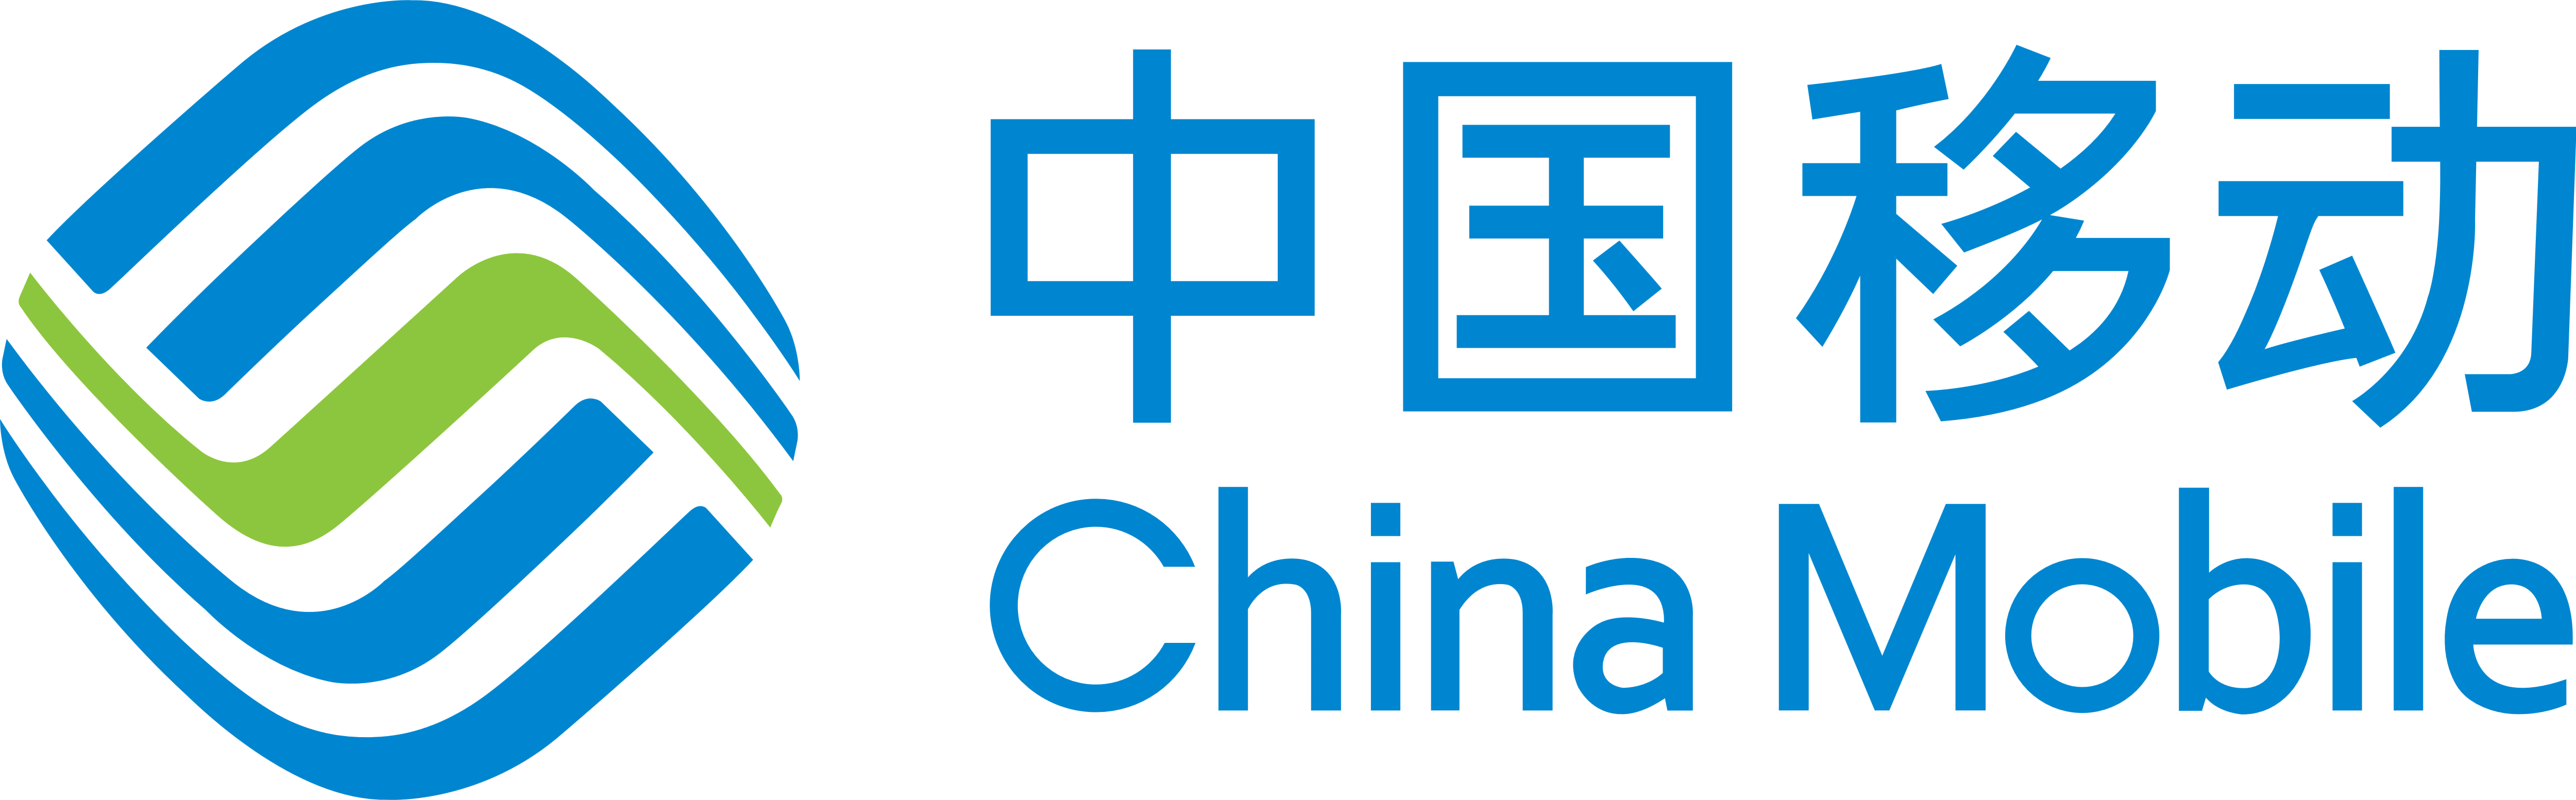 China Mobile logo png #1346